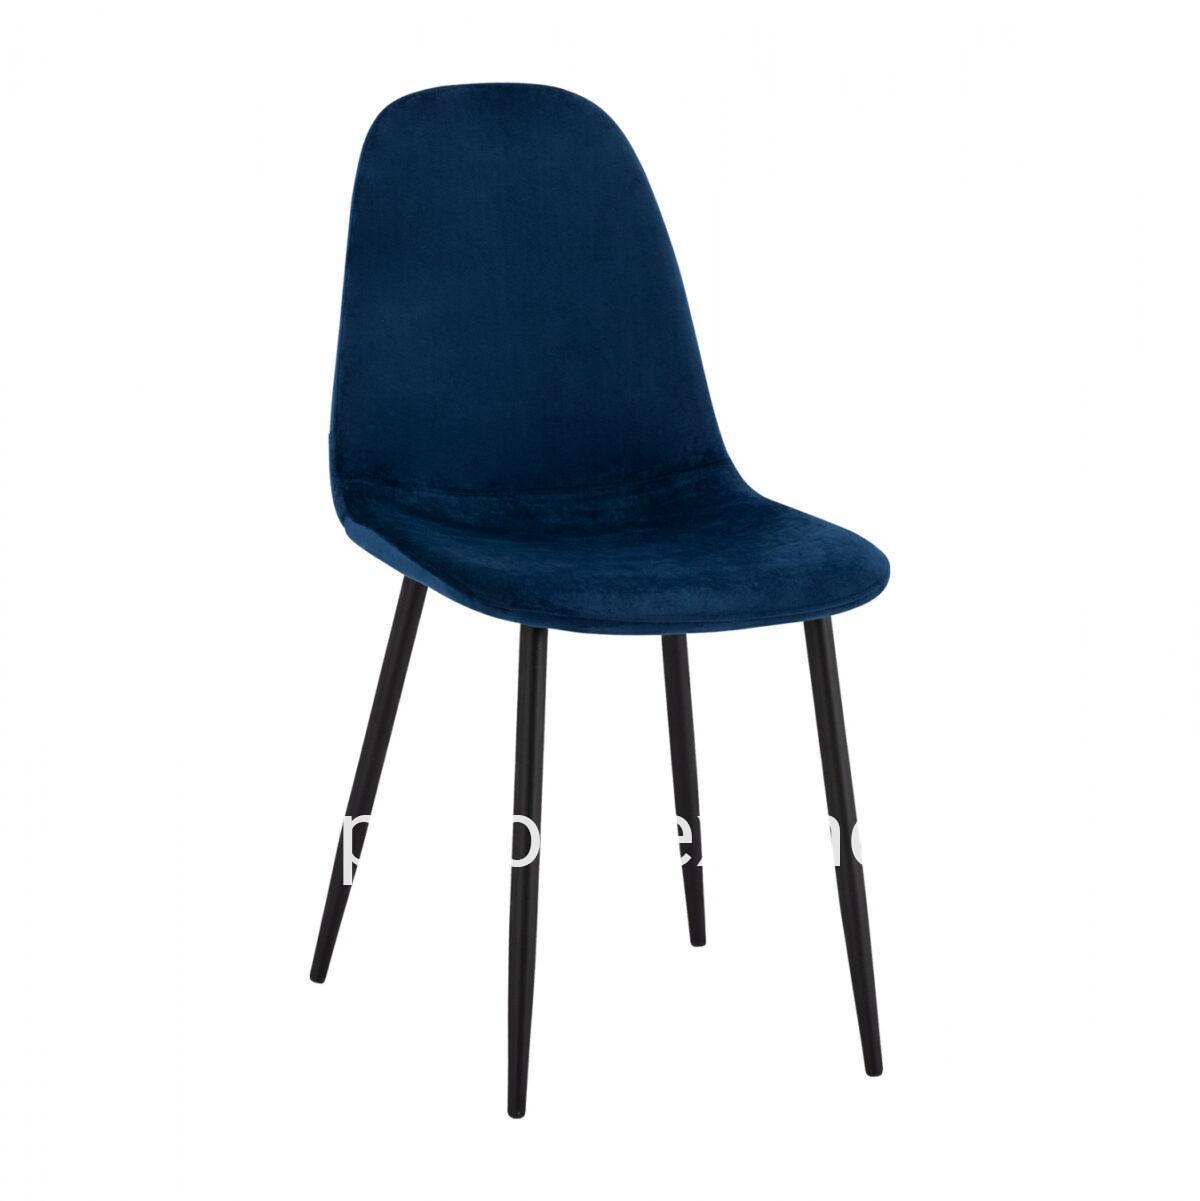 Chair Leonardo Velvet Blue with Metallic Legs HM00100.08 43x54x88 cm.